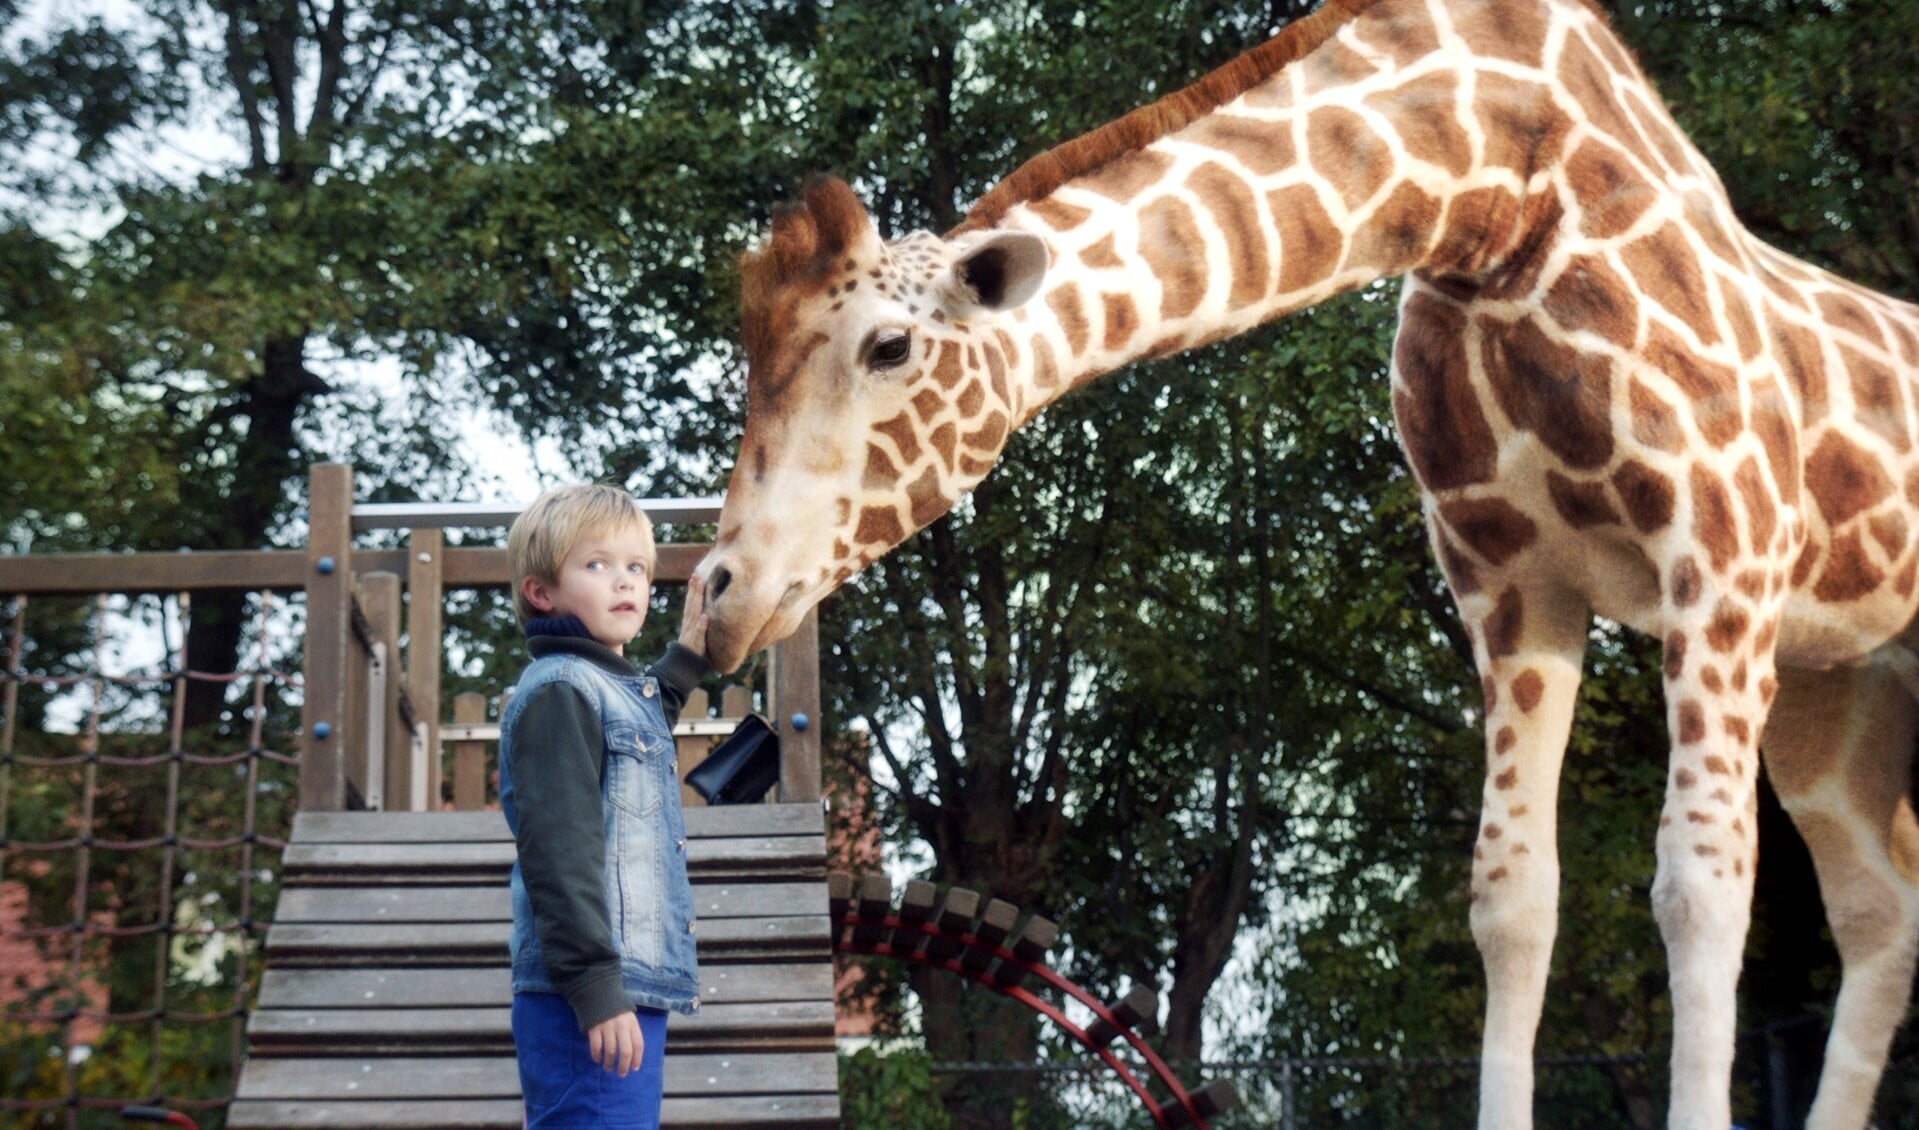 Dikkertje Dap met de giraf. Foto: PR